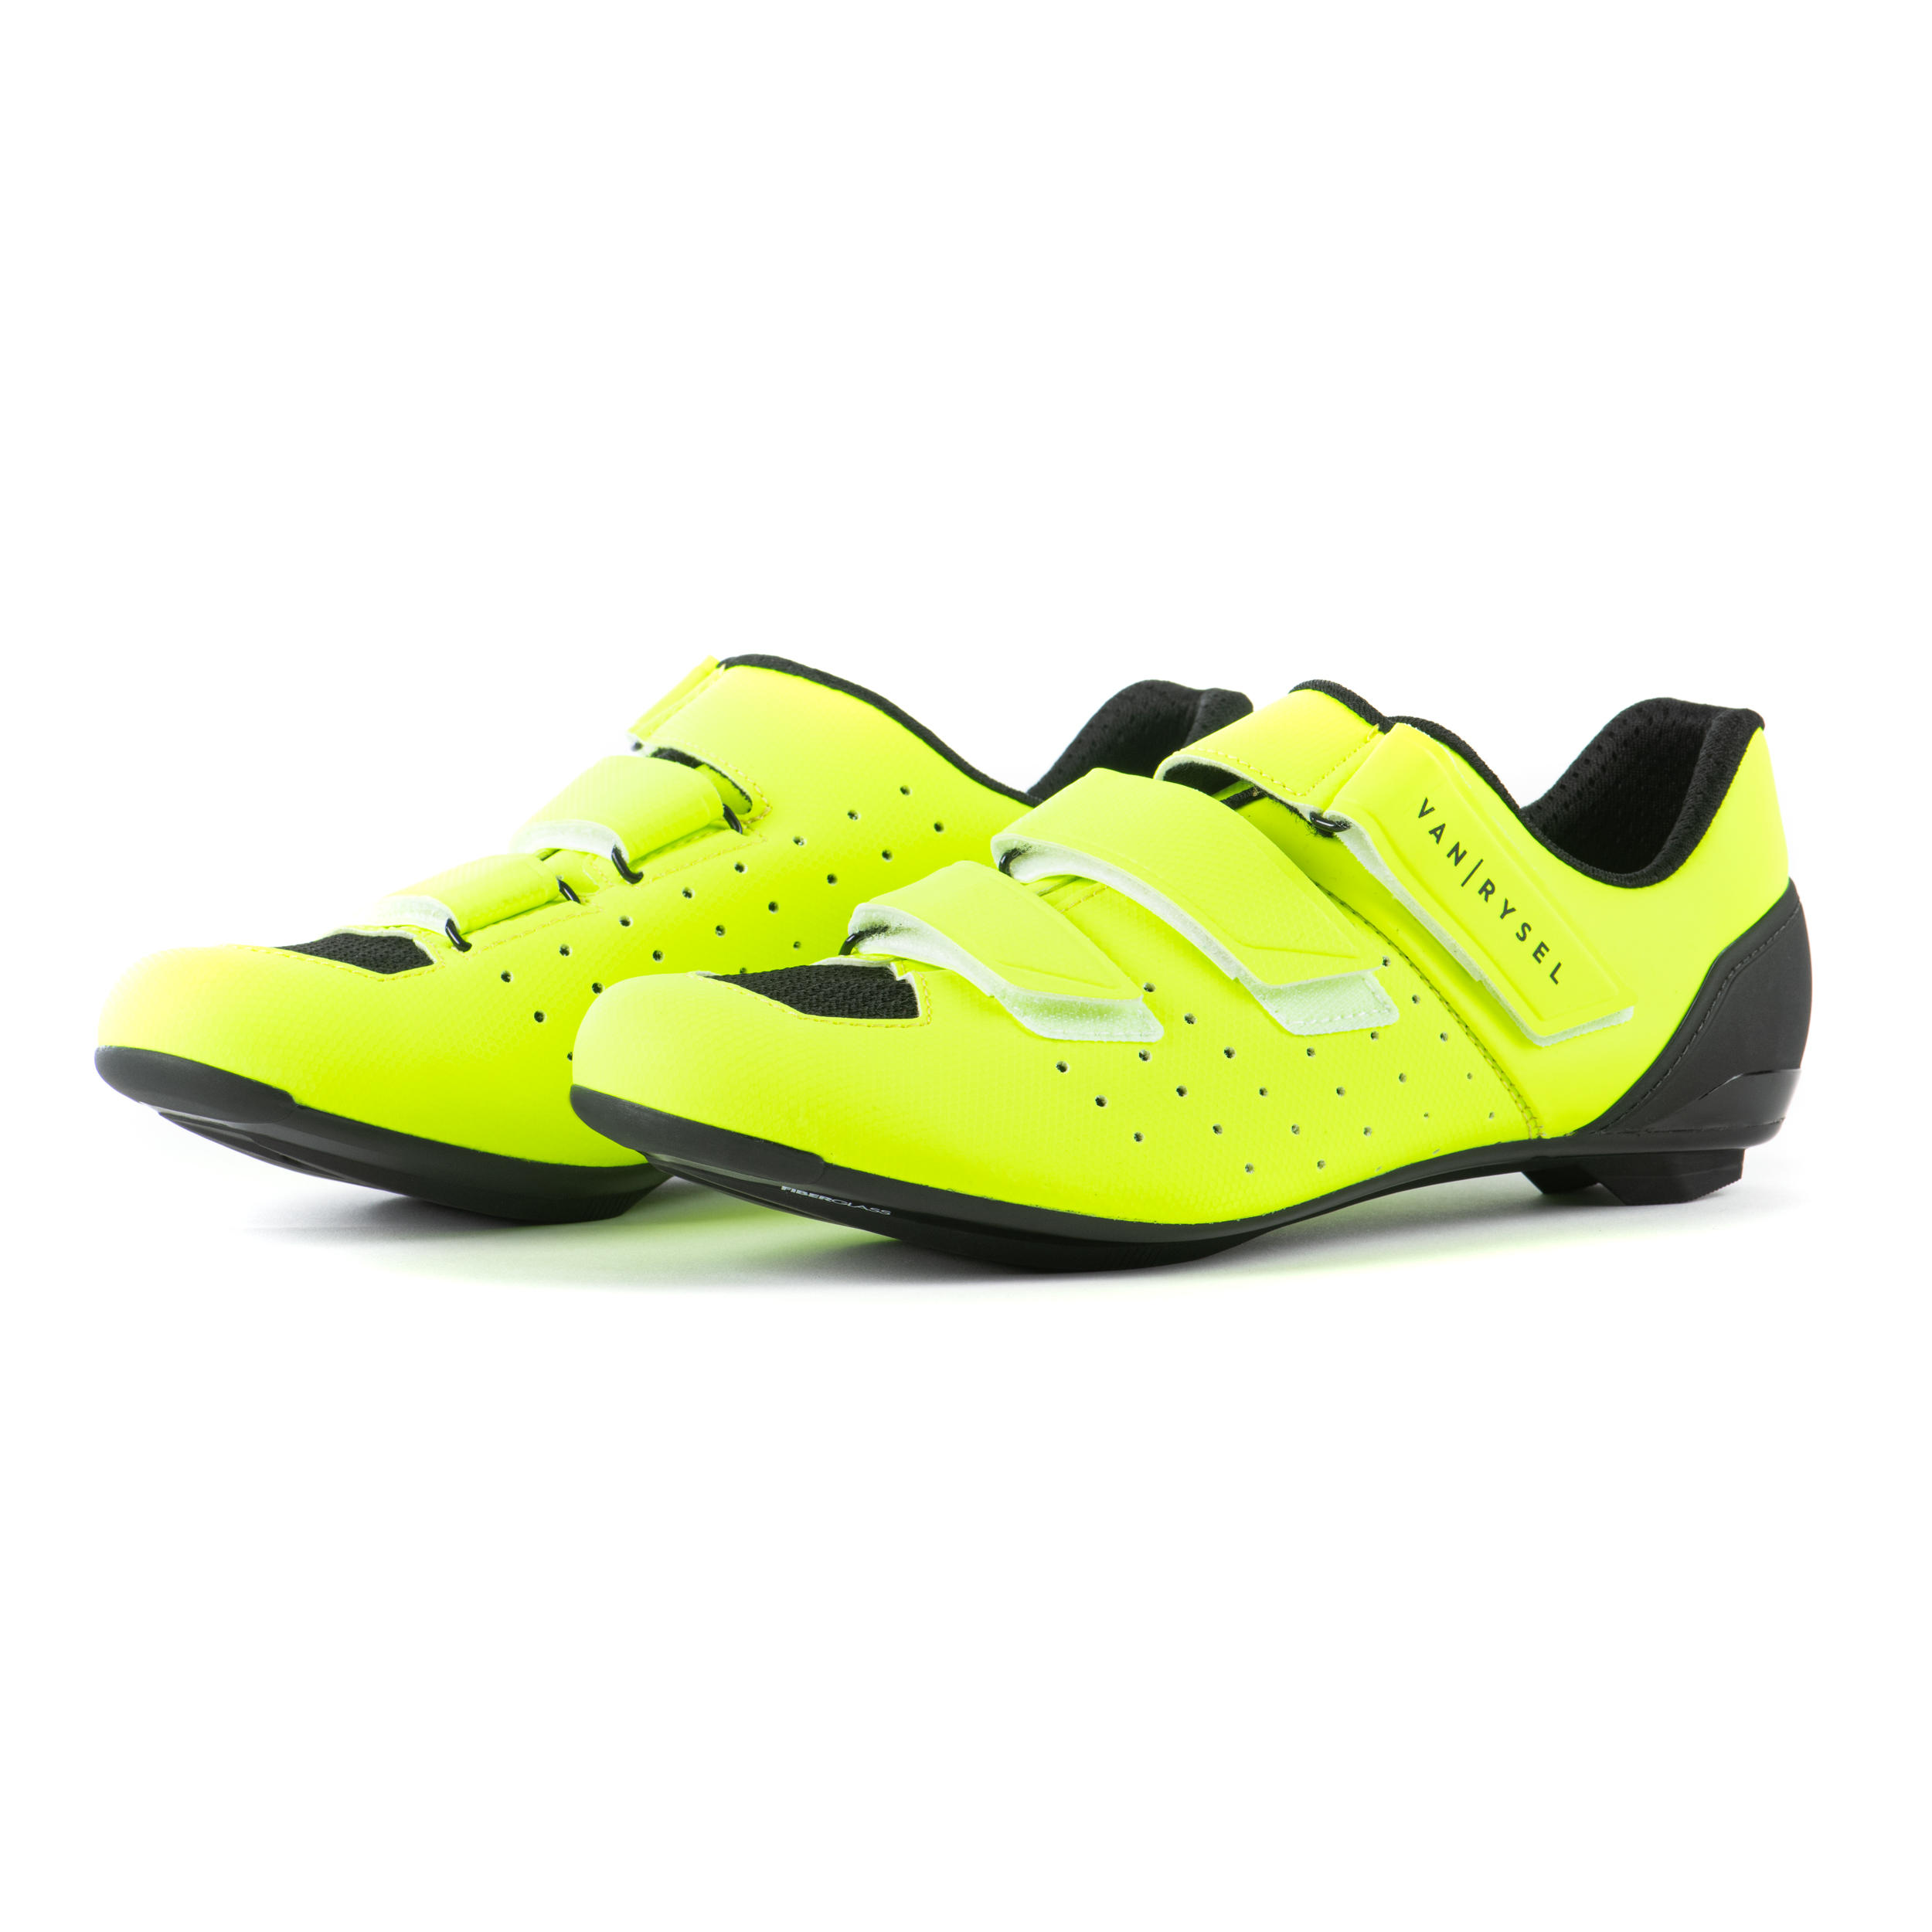 RCR500 Road Cycling Shoes - Neon Yellow